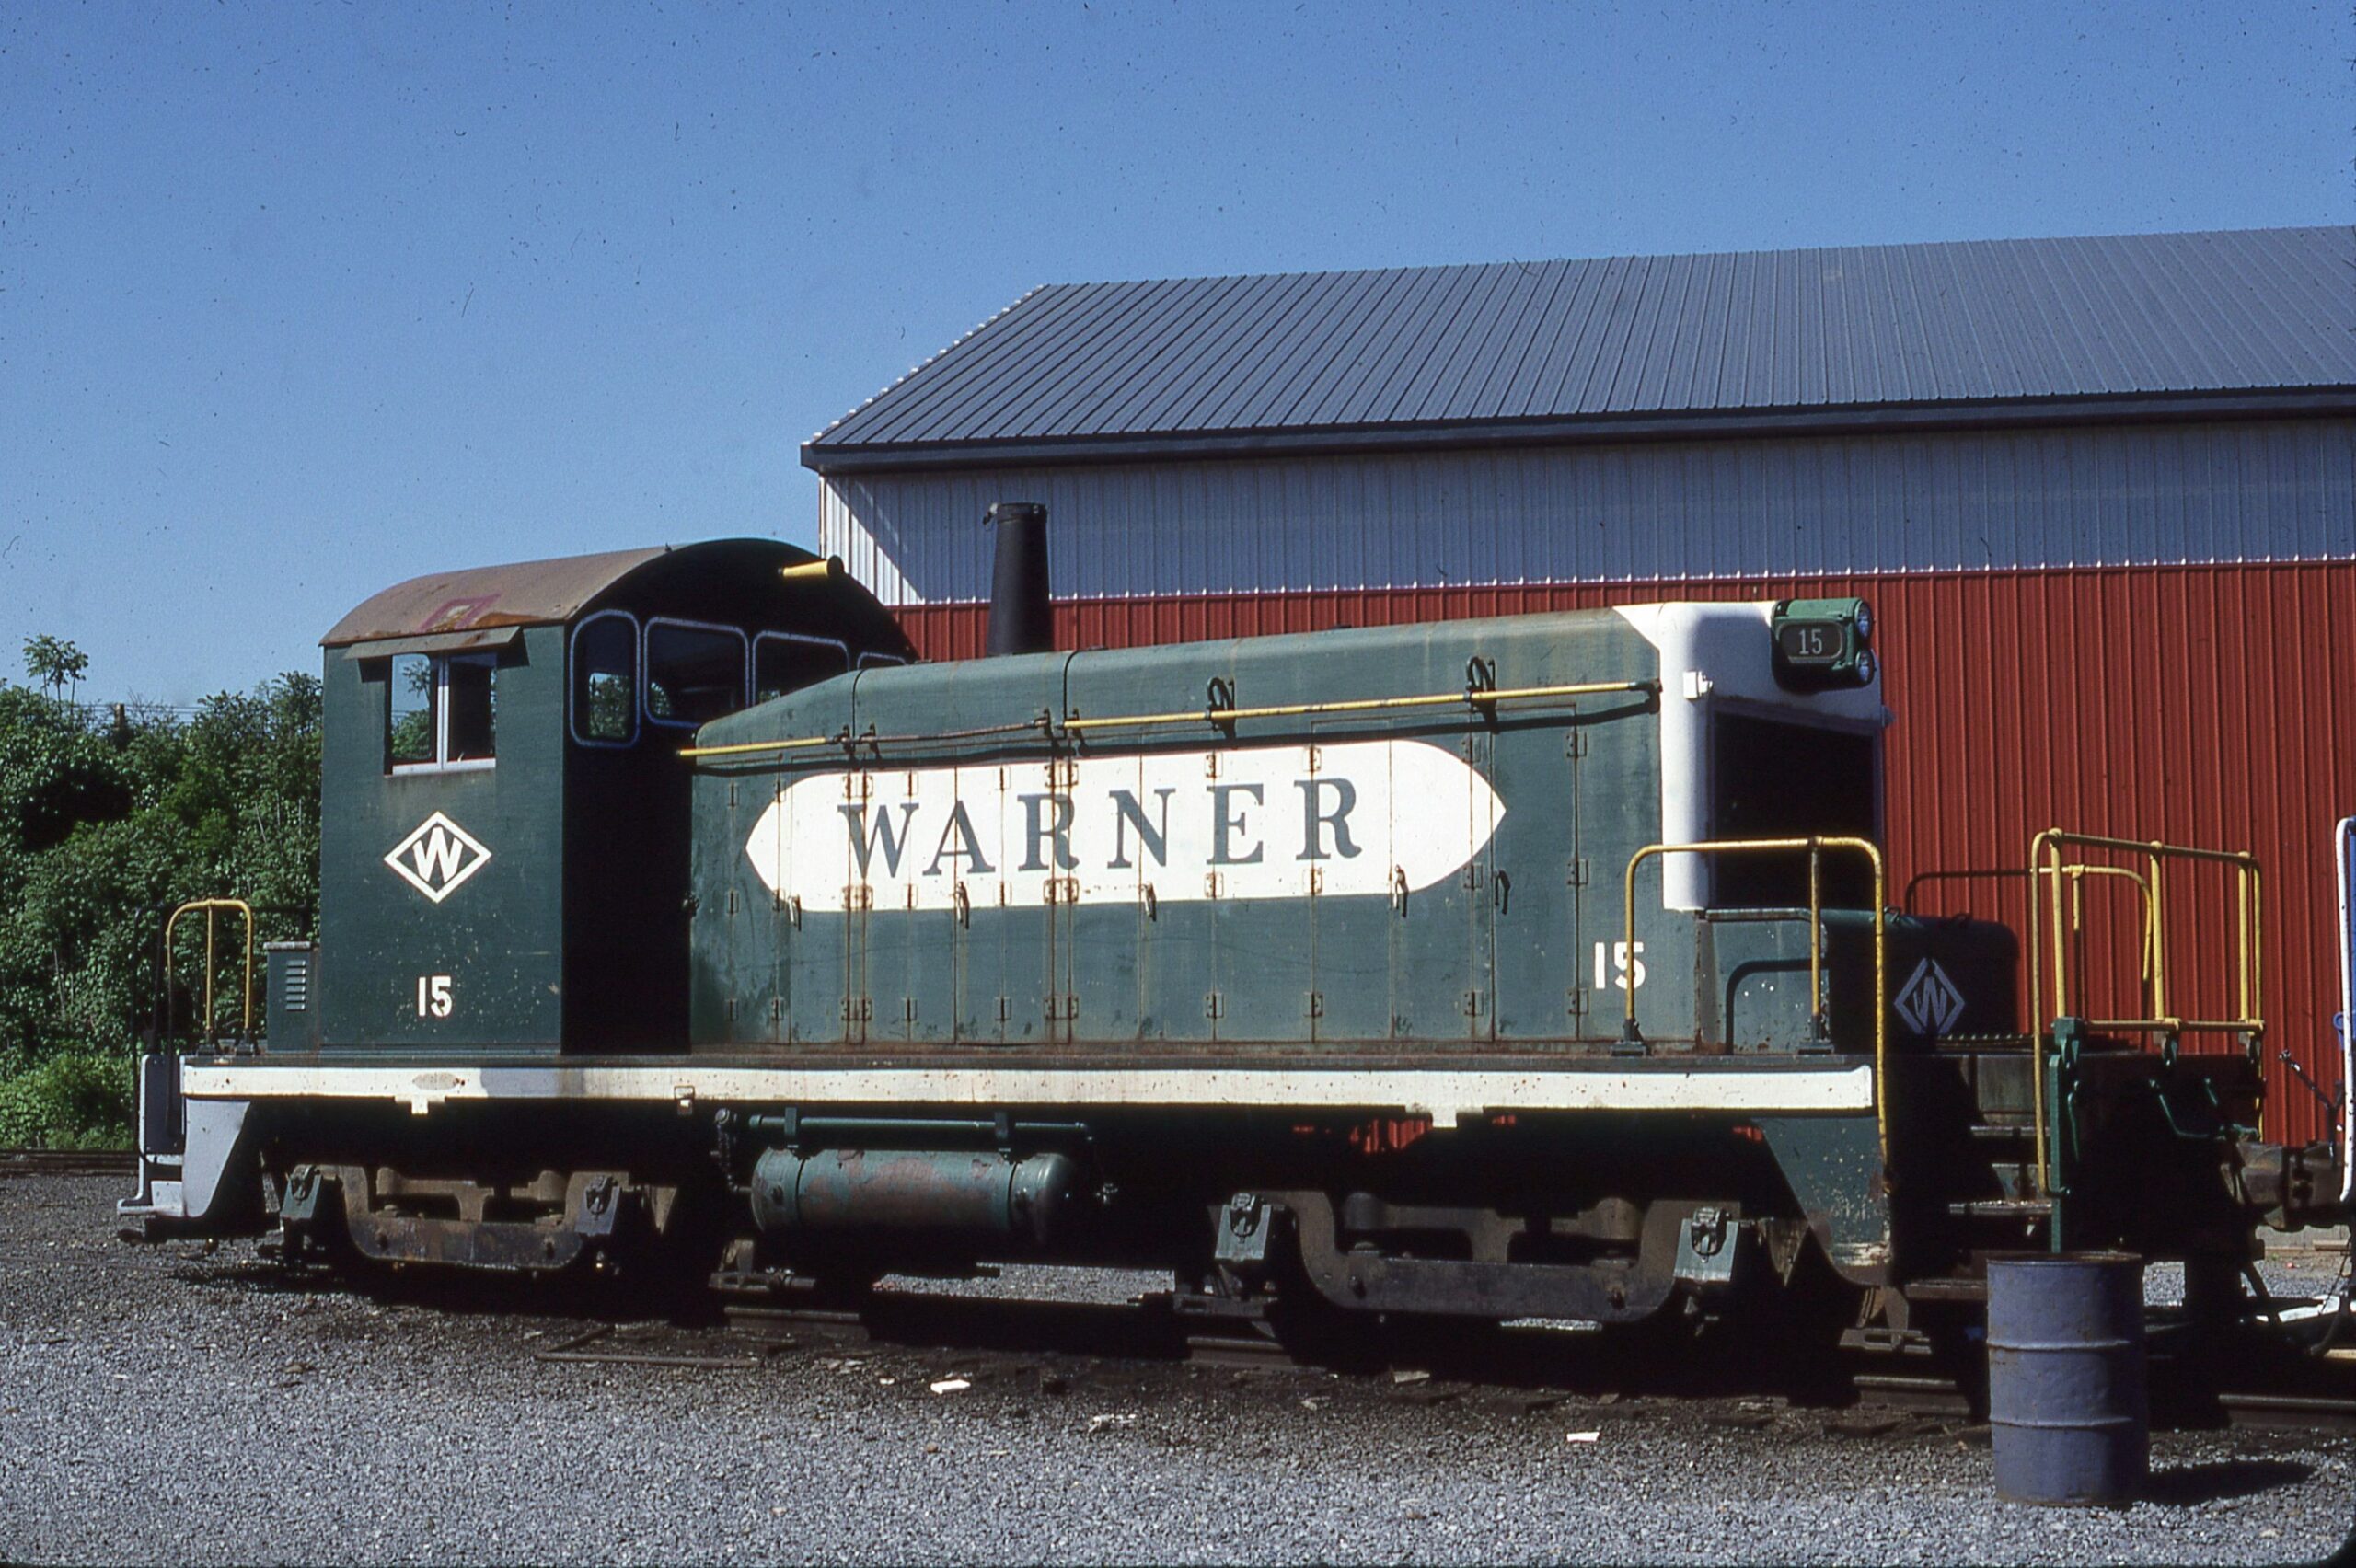 Warner Sand and Gravel | Hamburg, Pennsylvania | EMD SW1 #15 diesel-electric locomotive | May 29, 1989 | Rick Johnson photograph | Dick Flock collection